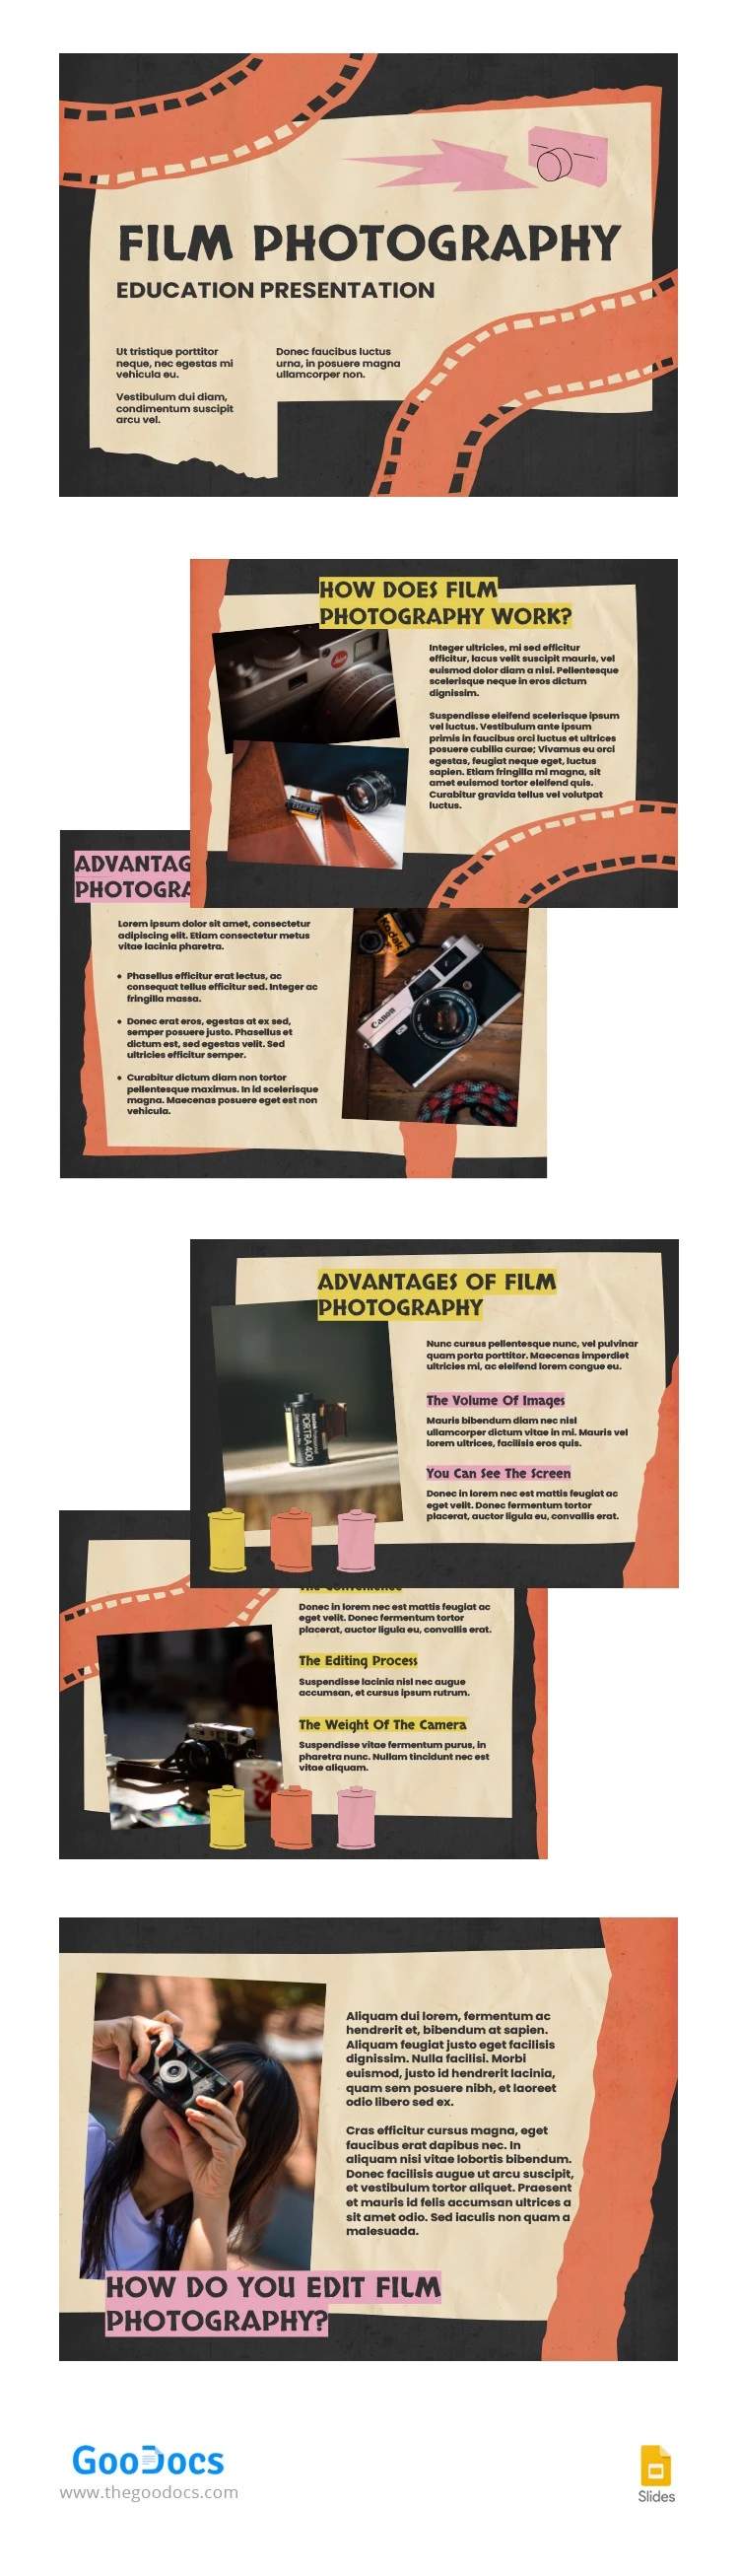 Film Photography Education Presentation - free Google Docs Template - 10065712